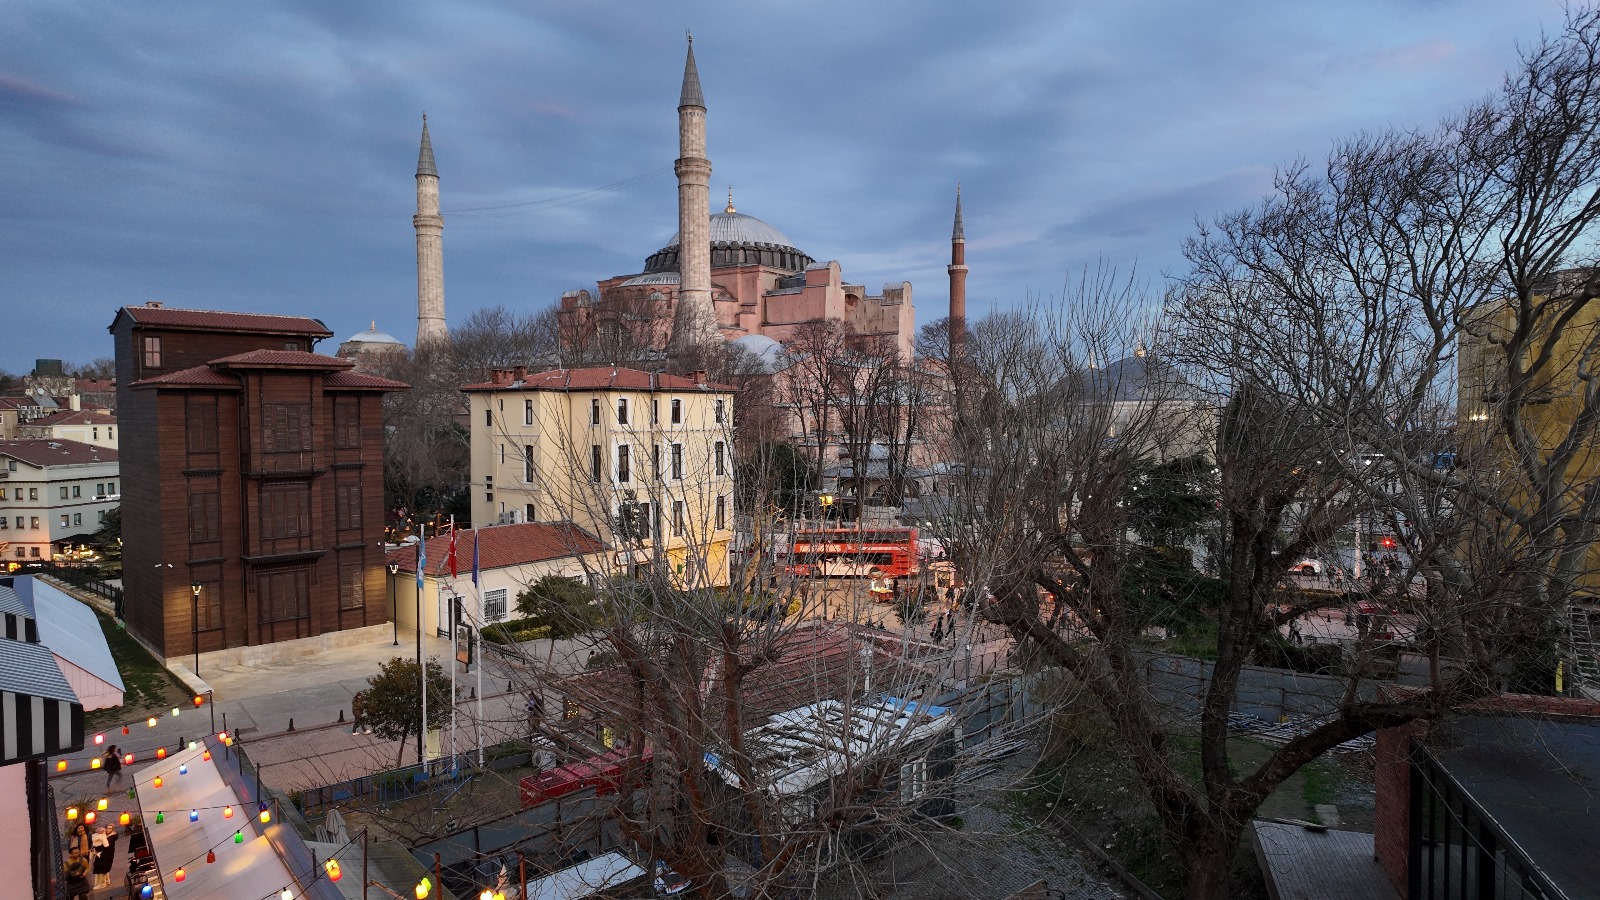 Gallery Les Arts Turcs Adress/Contacs in Sultanahmet,Istanbul,Turkey